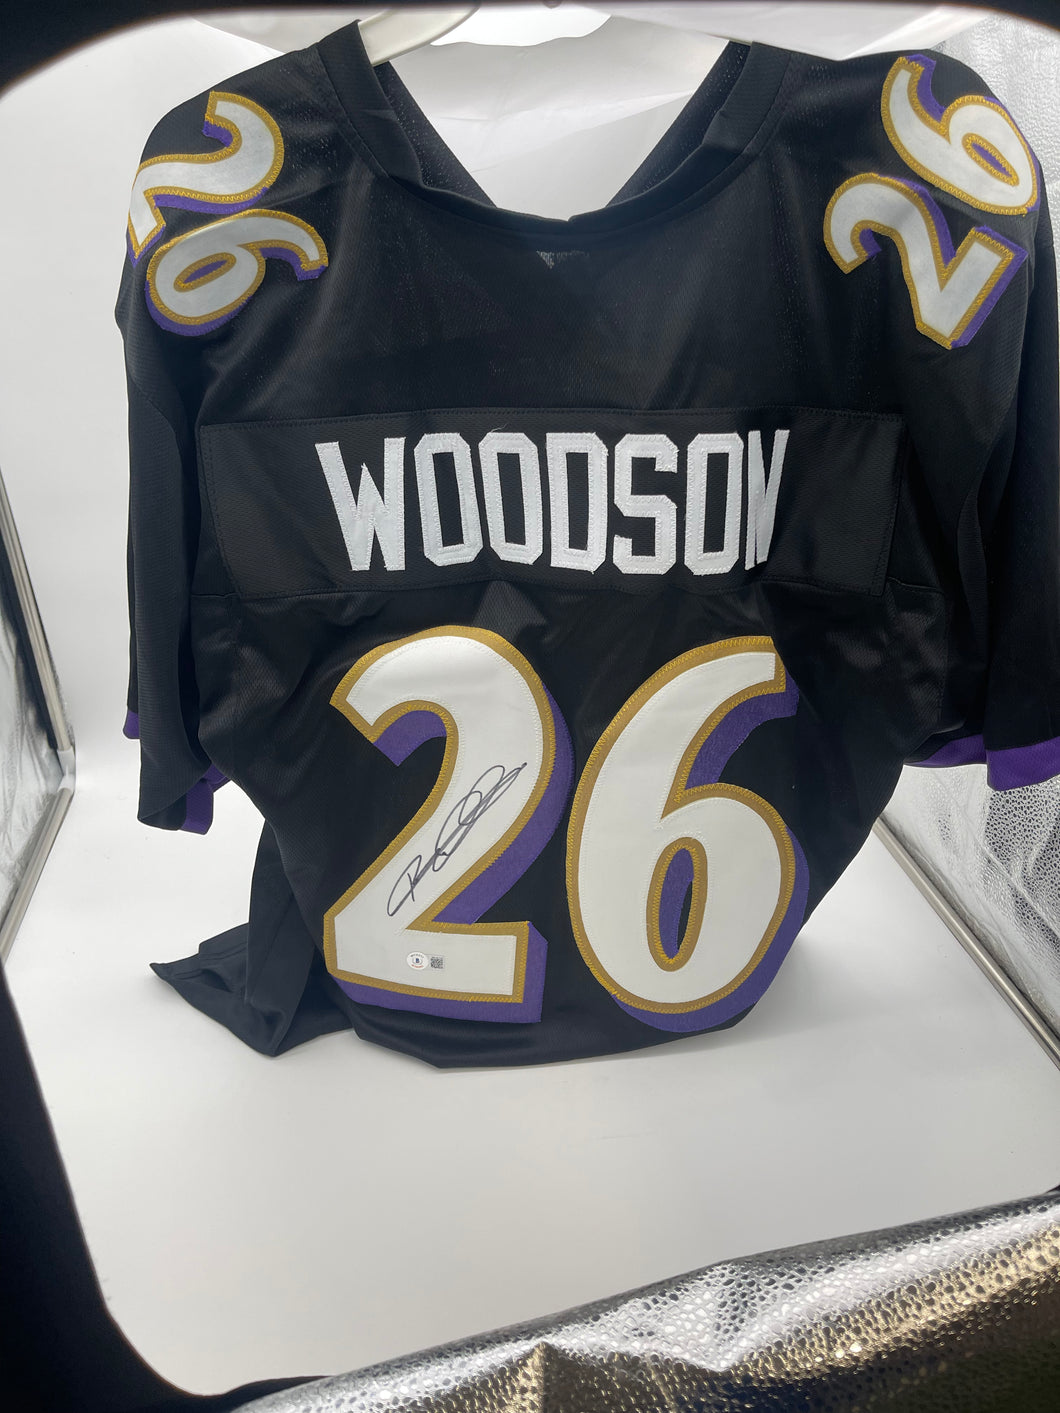 Rod Woodson signed jersey